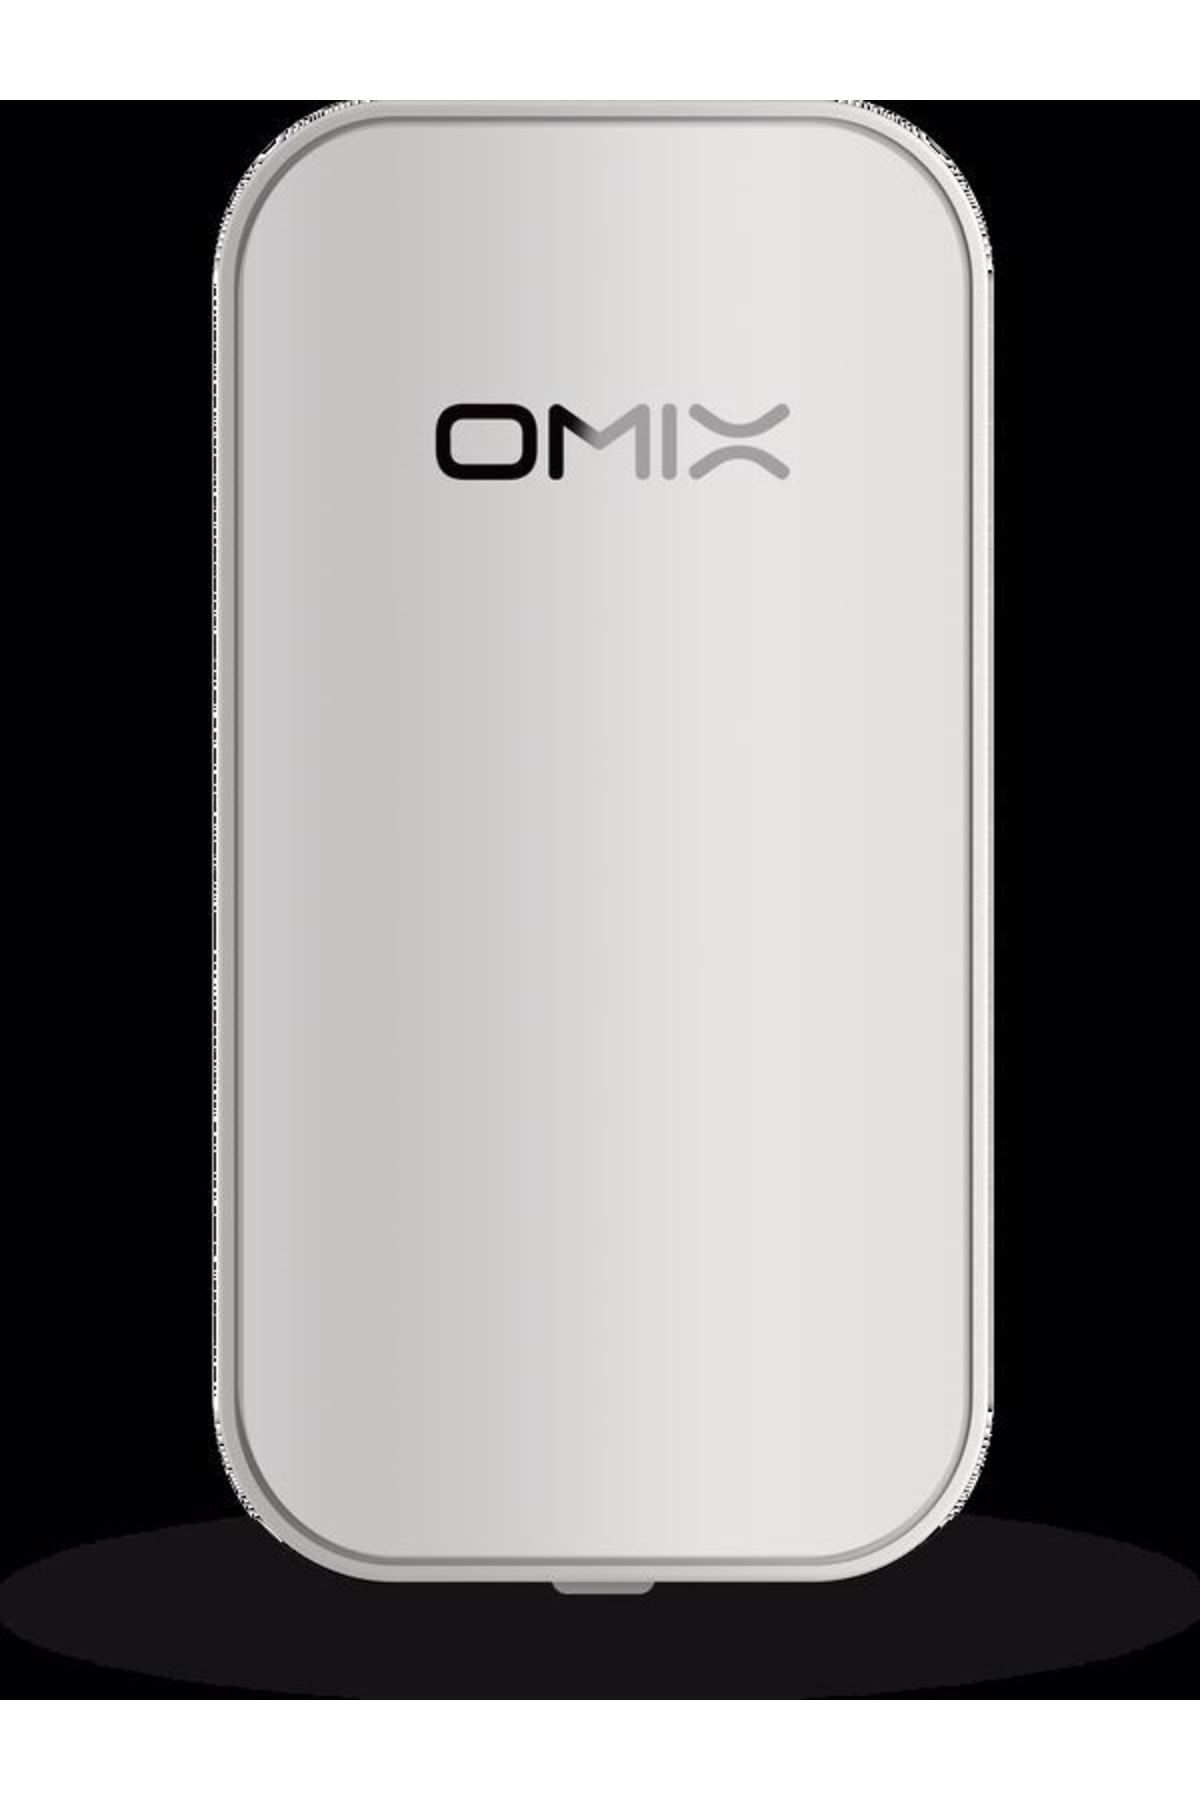 omix Mıx Wı-fı Pro Repeater Modem-beyaz